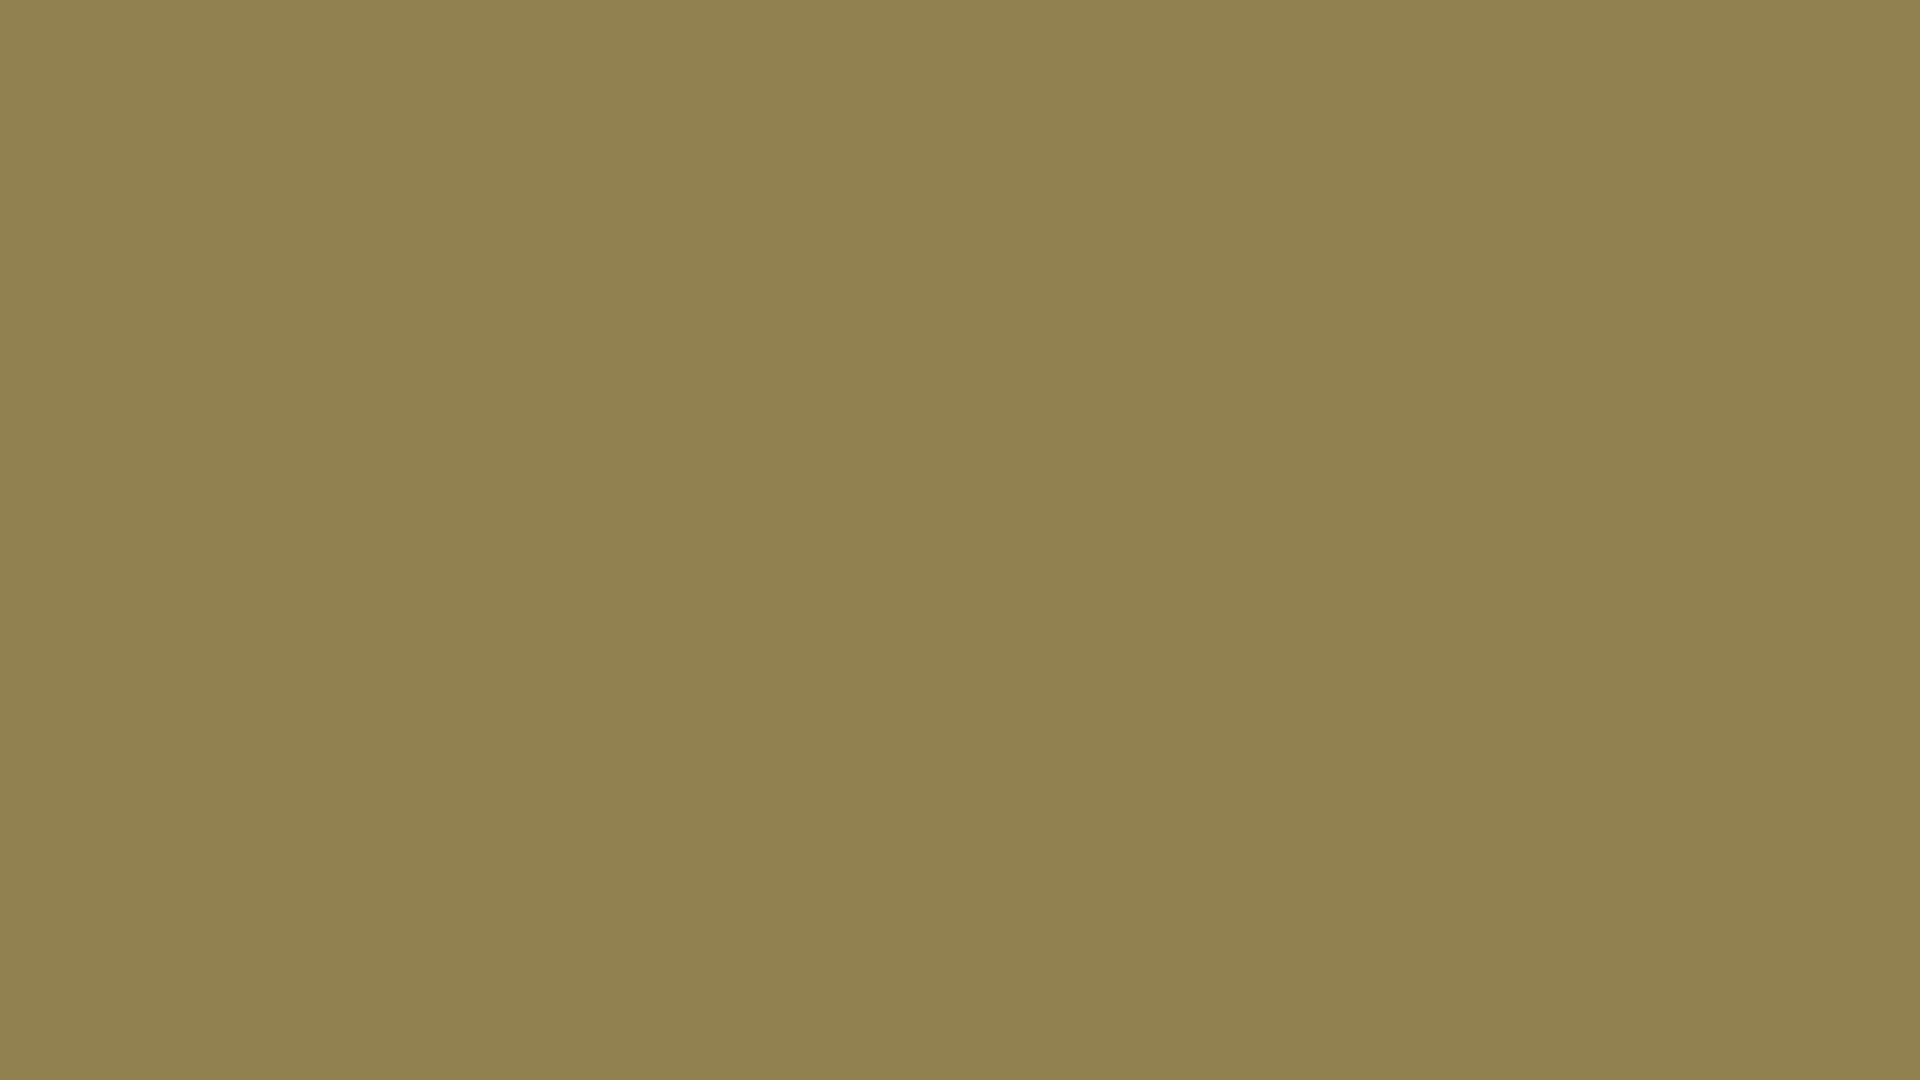 1920x1080 Dark Tan Solid Color Background